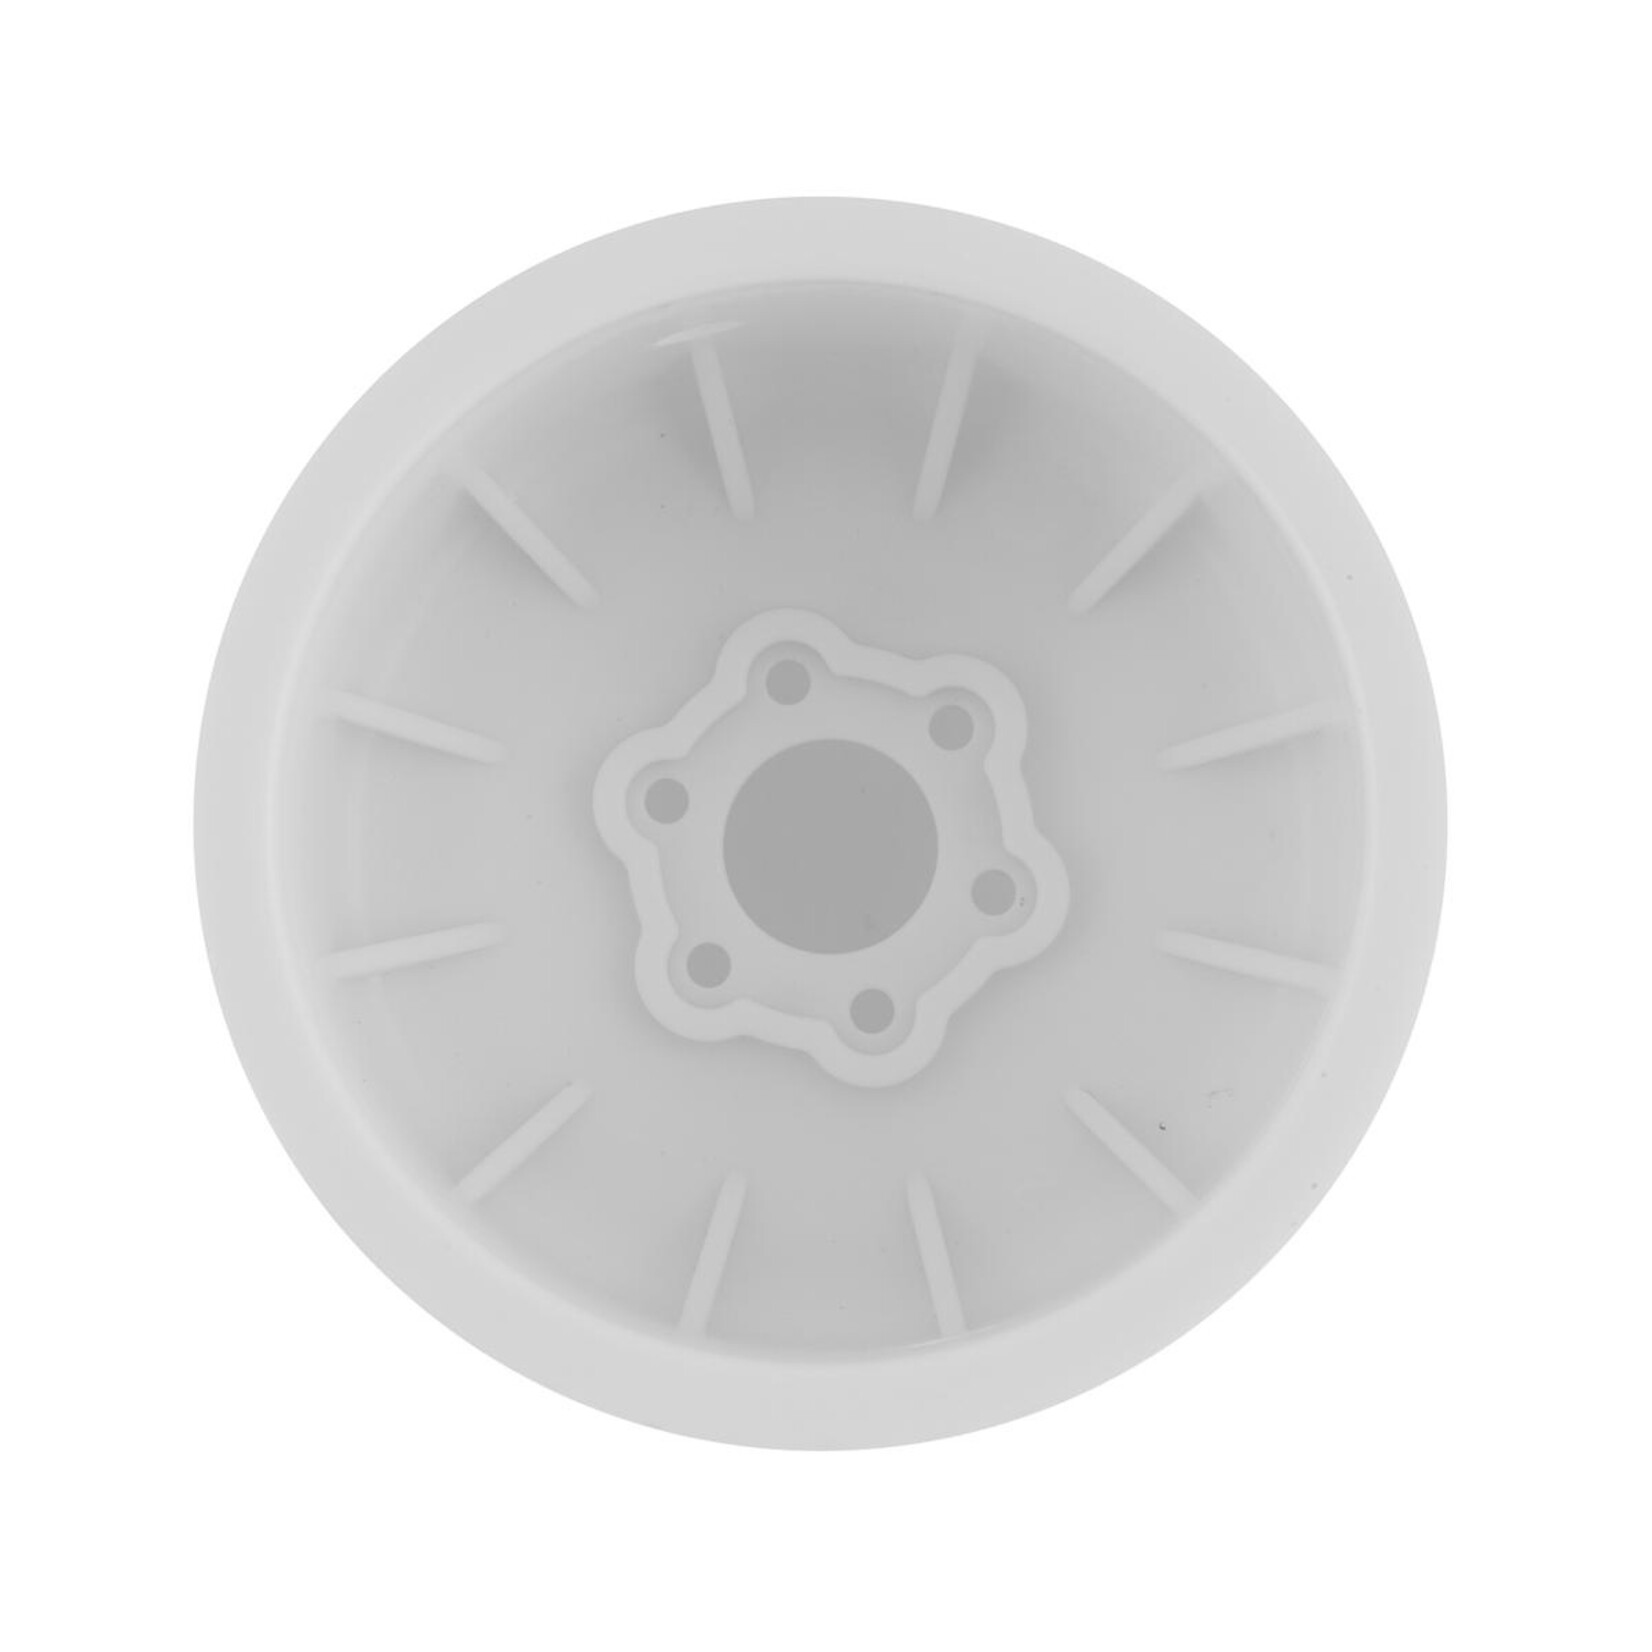 JConcepts JConcepts Tribute 2.6 x 3.6" Monster Truck Wheel (White) (2) #3377W